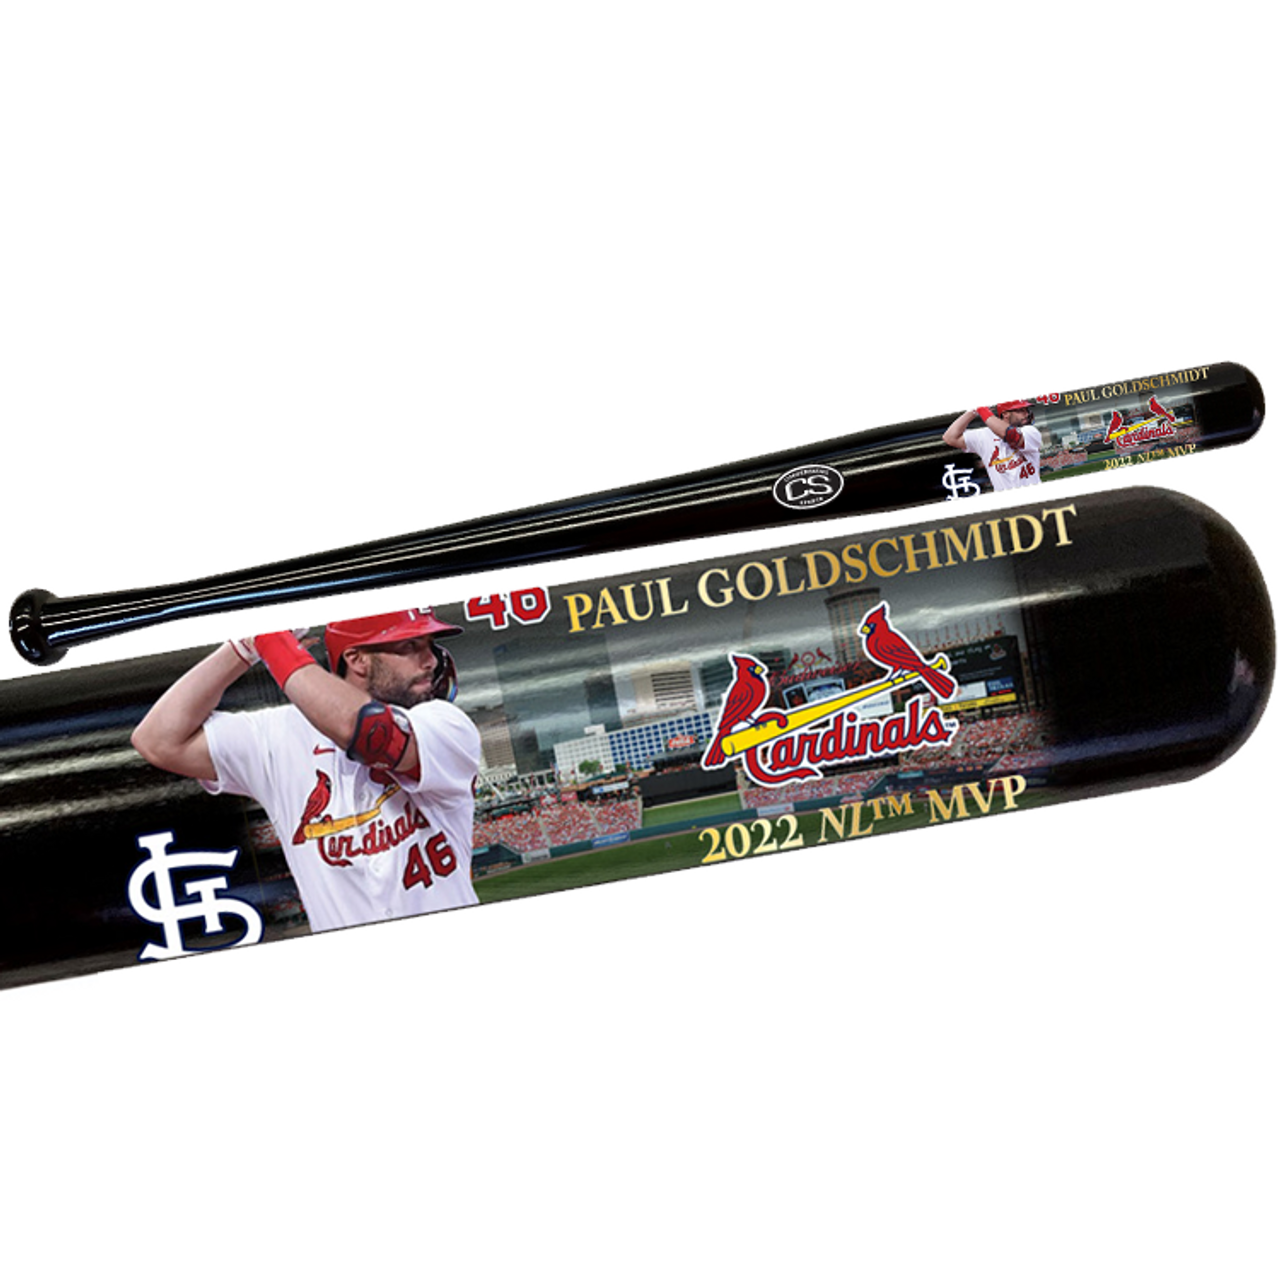 Chicago Cubs - Official MLB Licensed Baseball Bat Mugs & Gifts